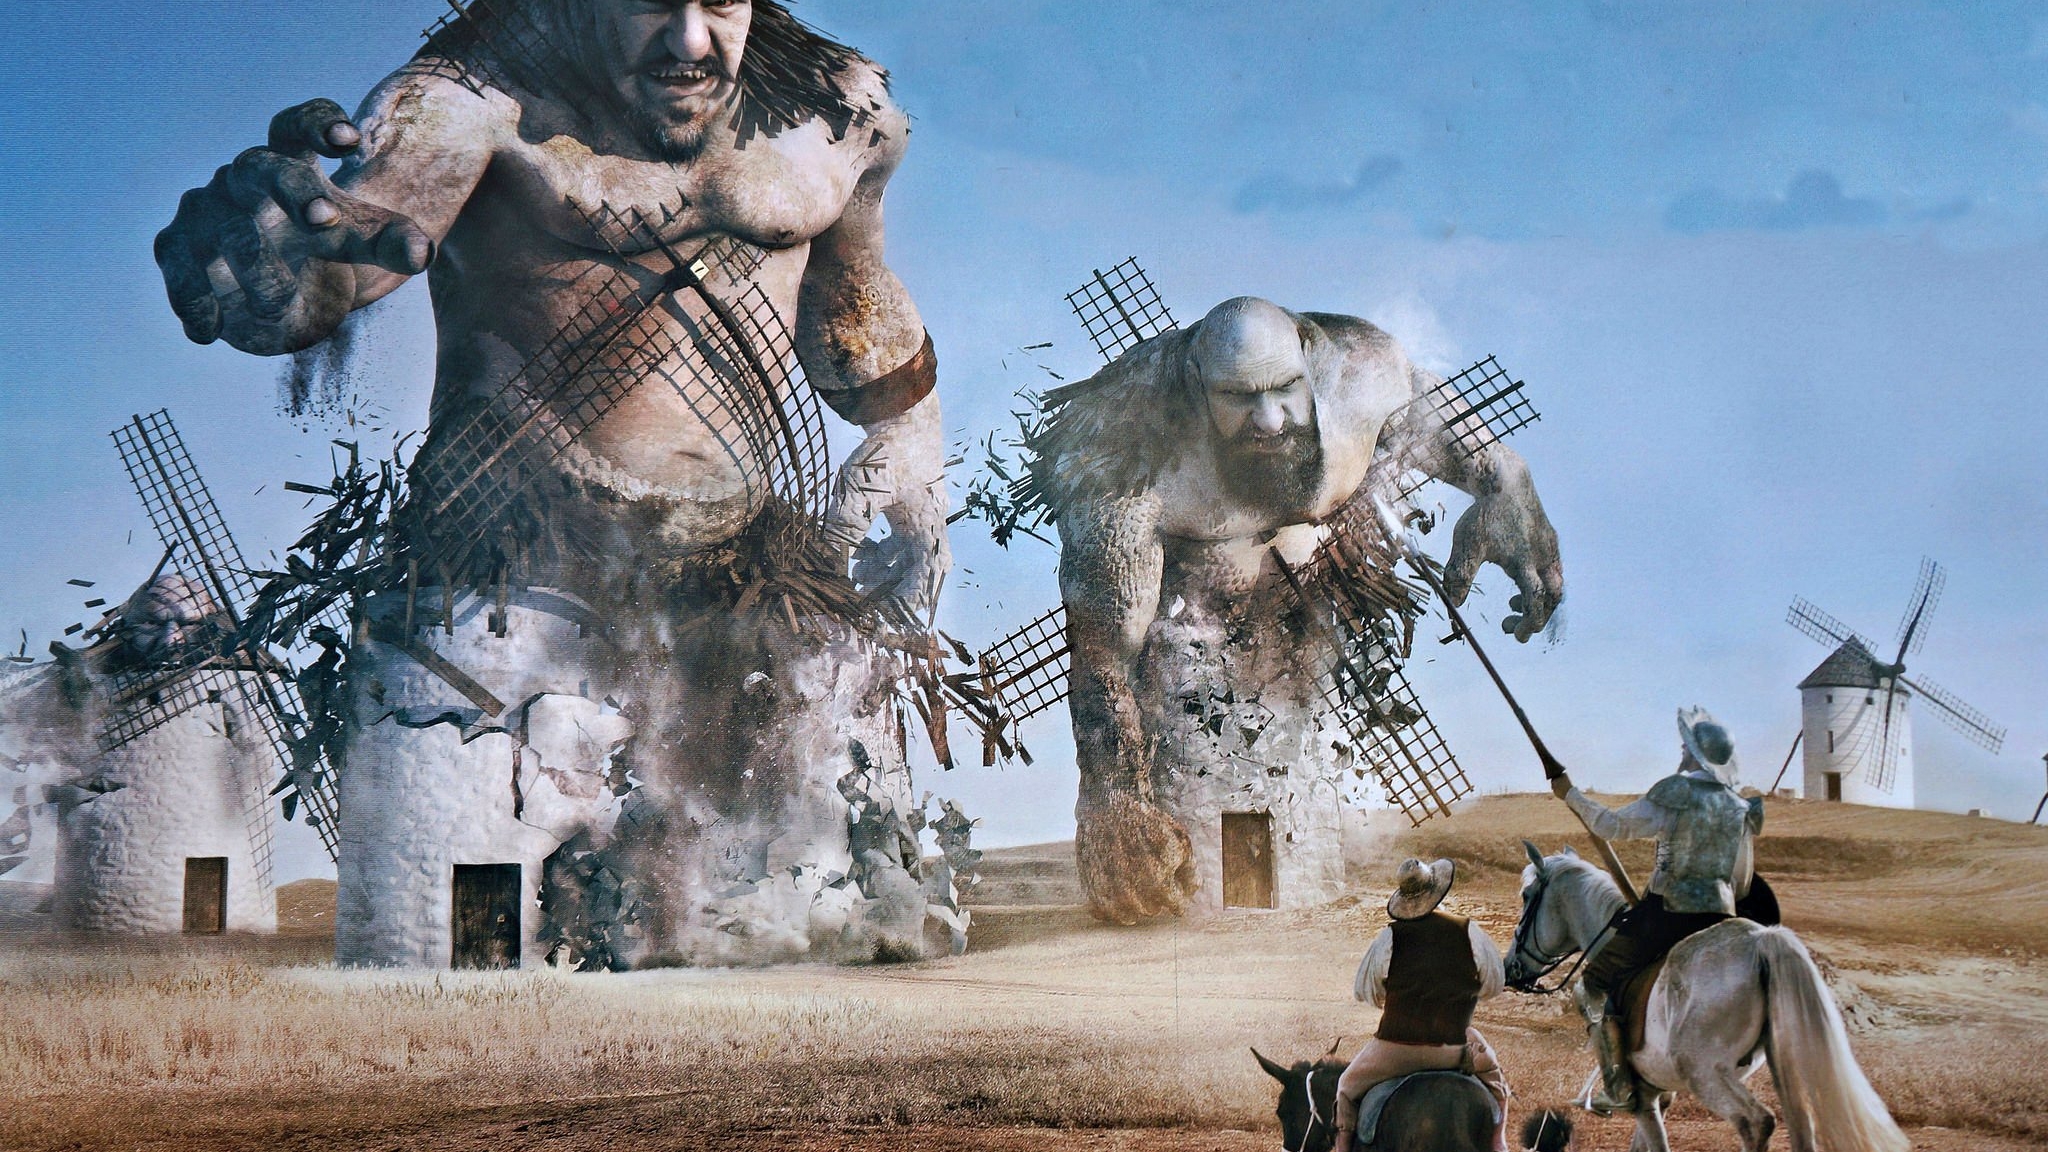 Don Quixote fighting imaginary giant windmills